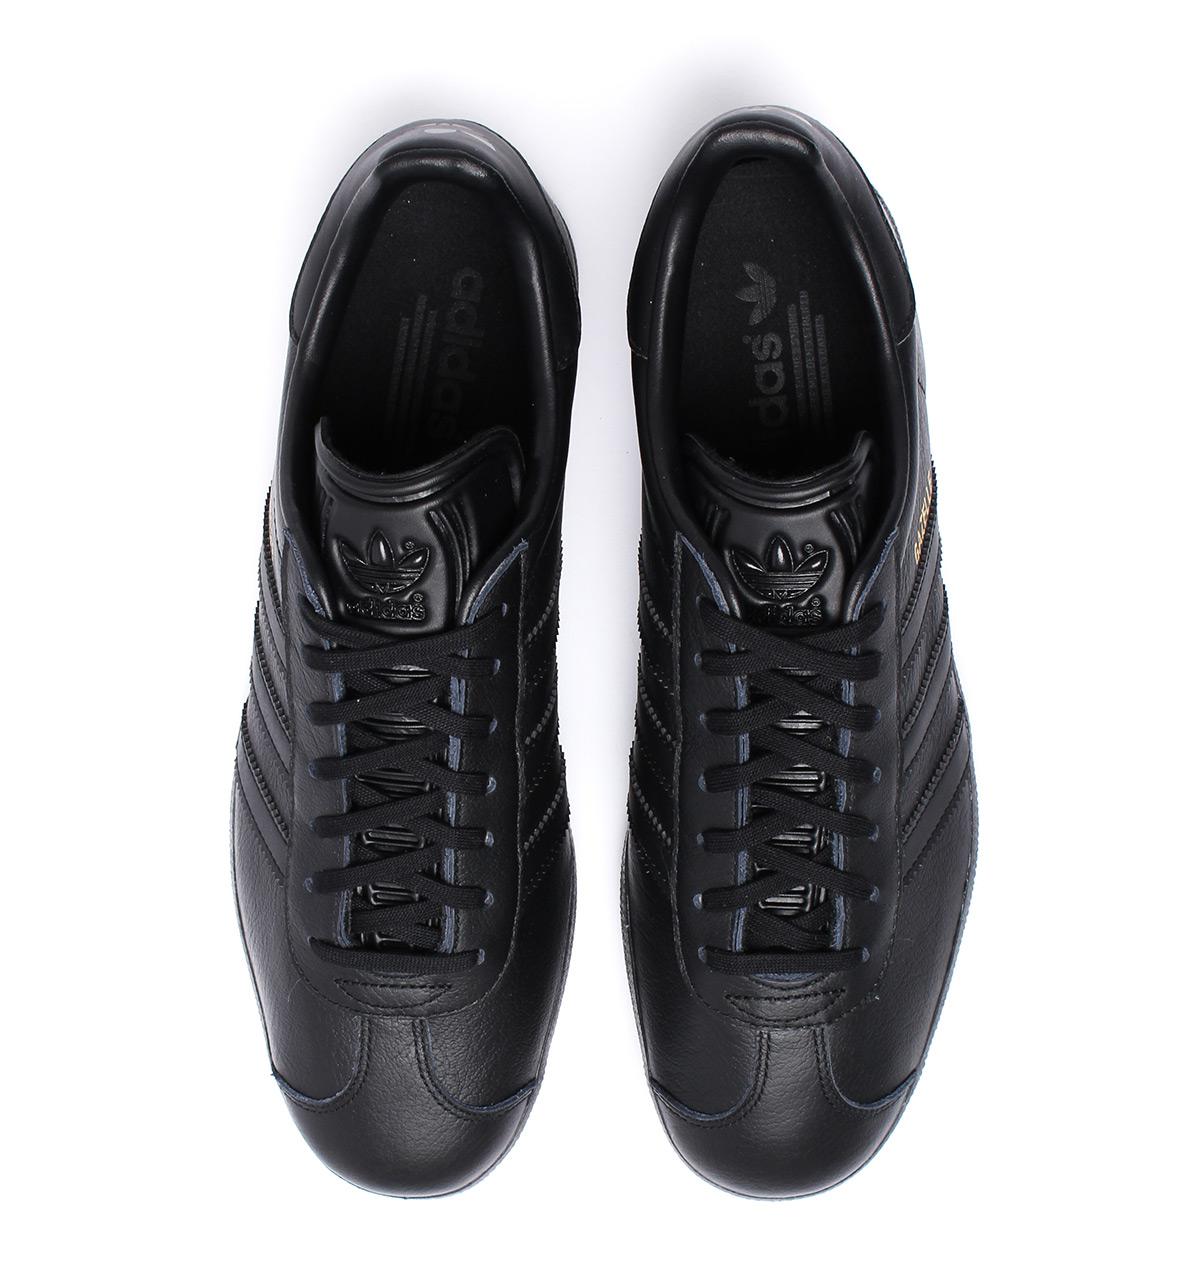 adidas gazelle mens black leather